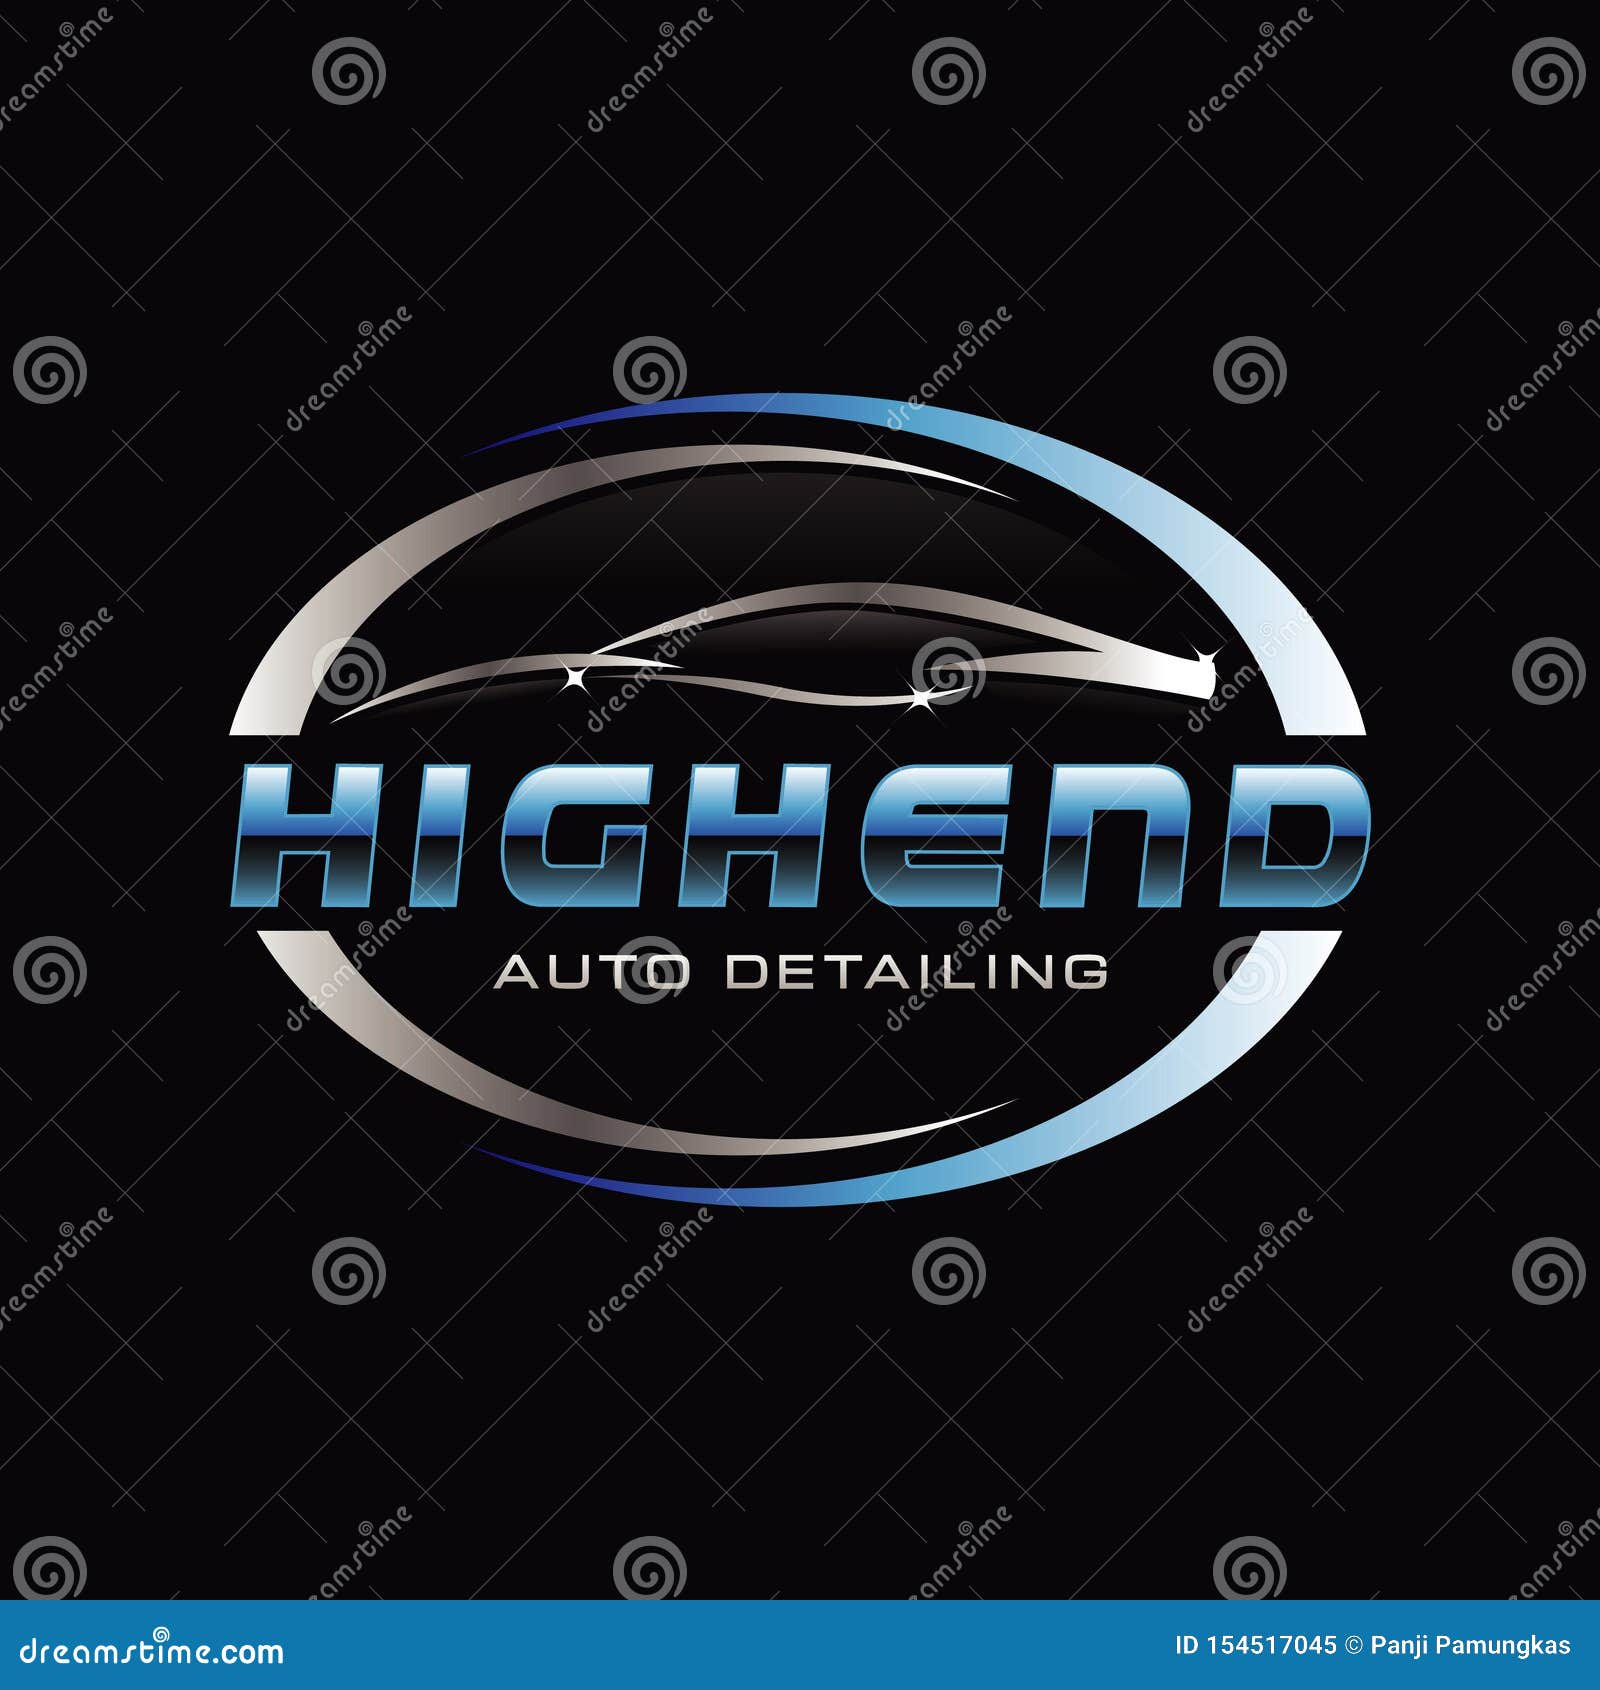 car auto detail logo 